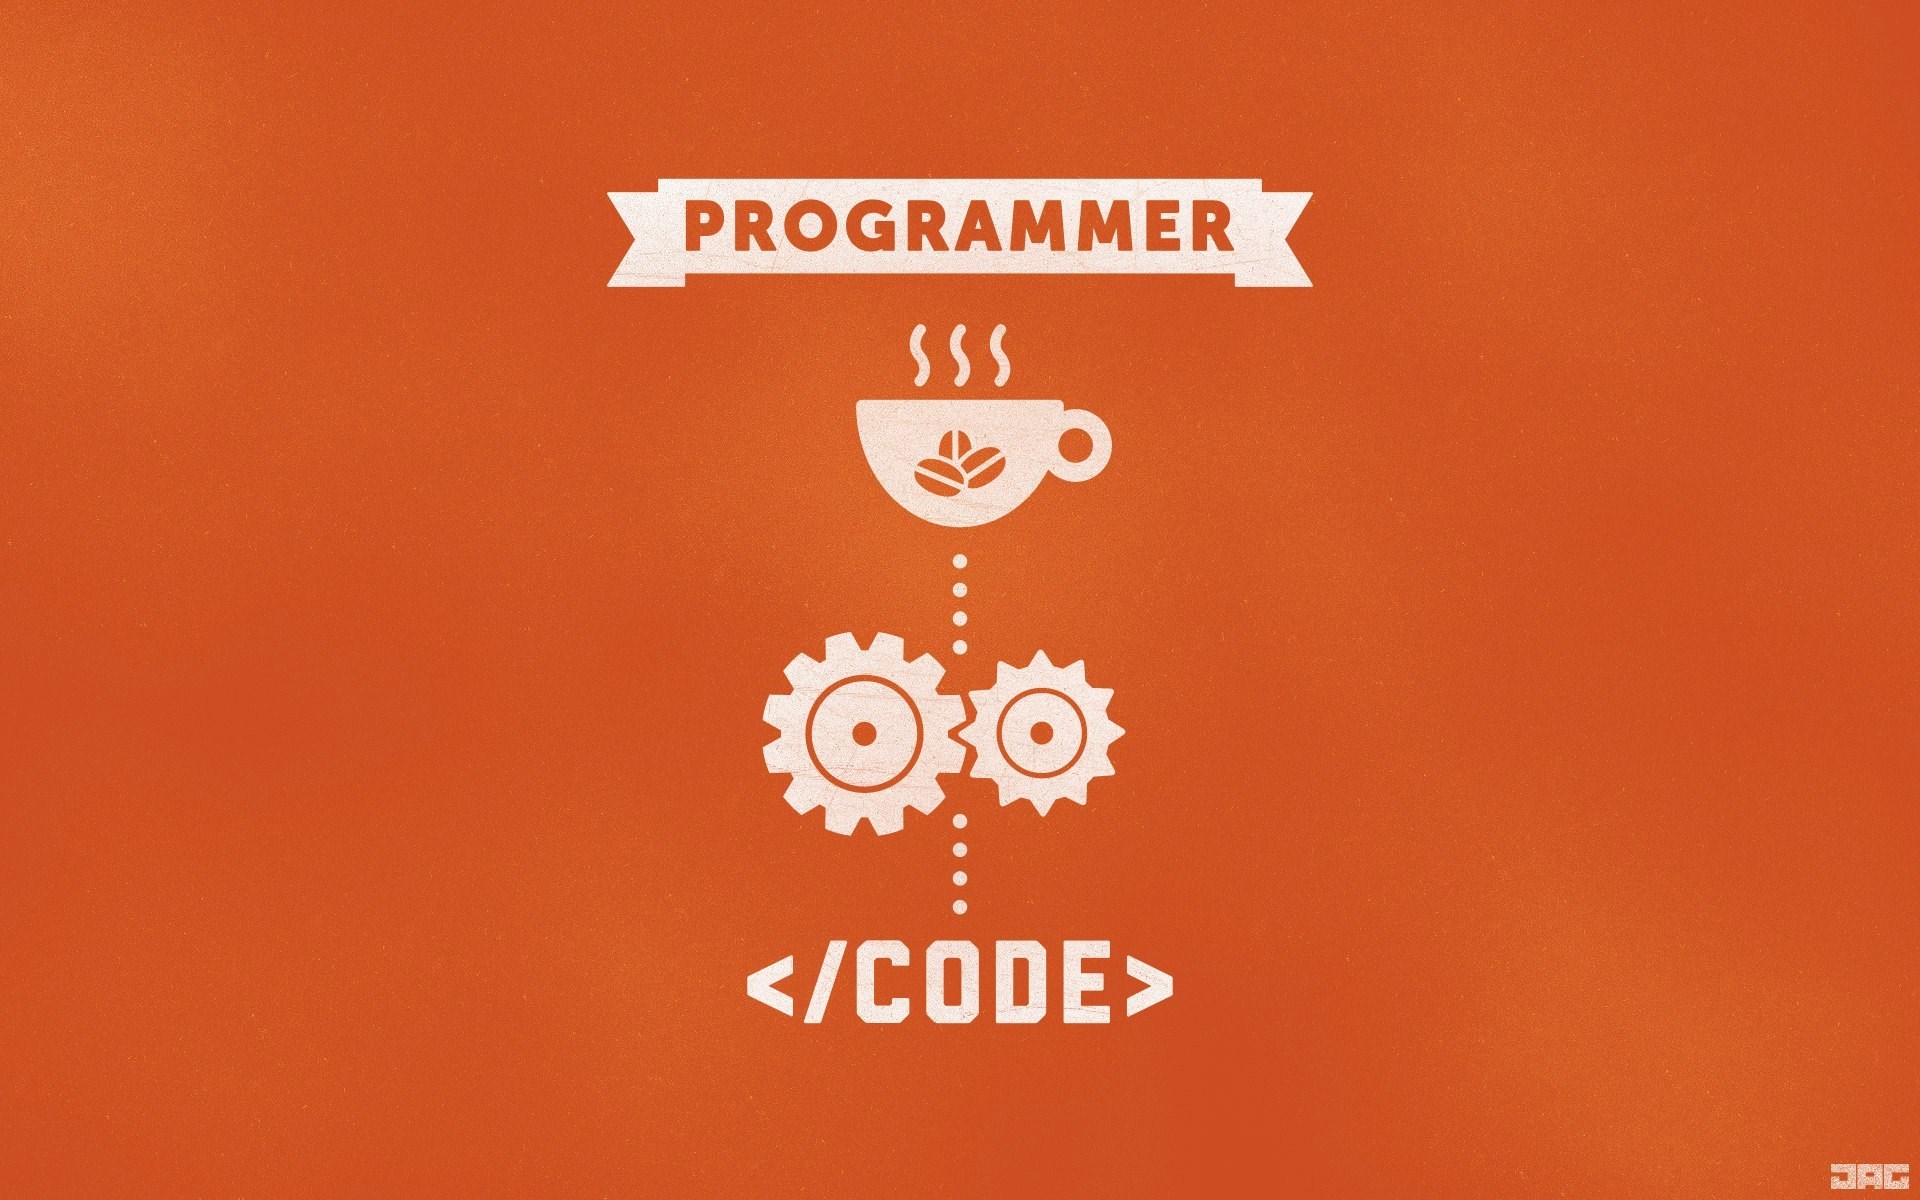 programming, technology